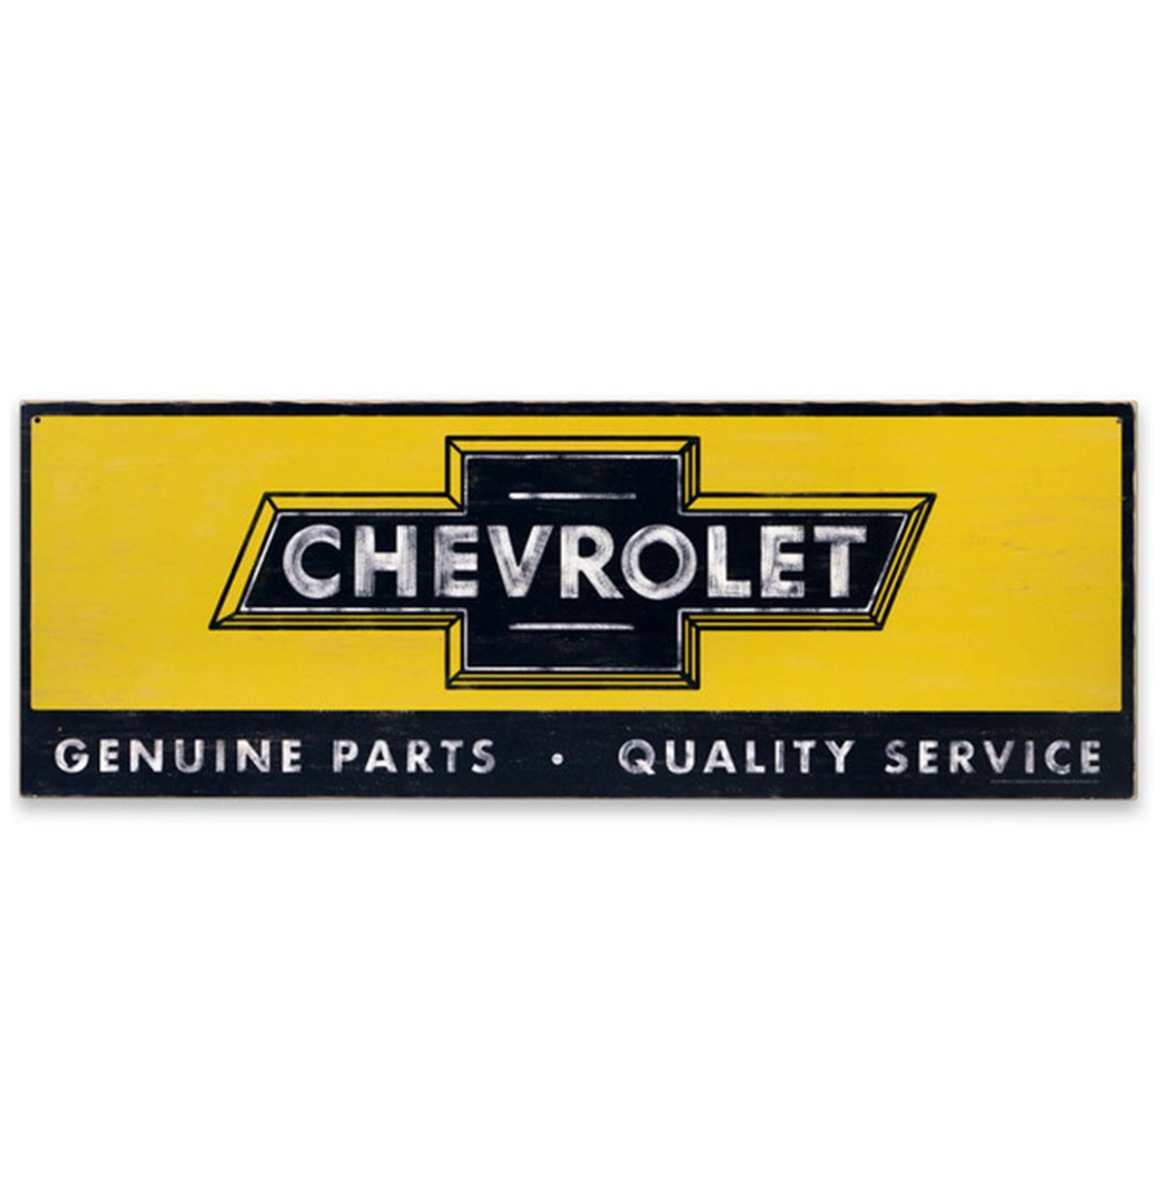 Fiftiesstore Chevrolet Parts & Service Houten Bord - 91 x 32cm